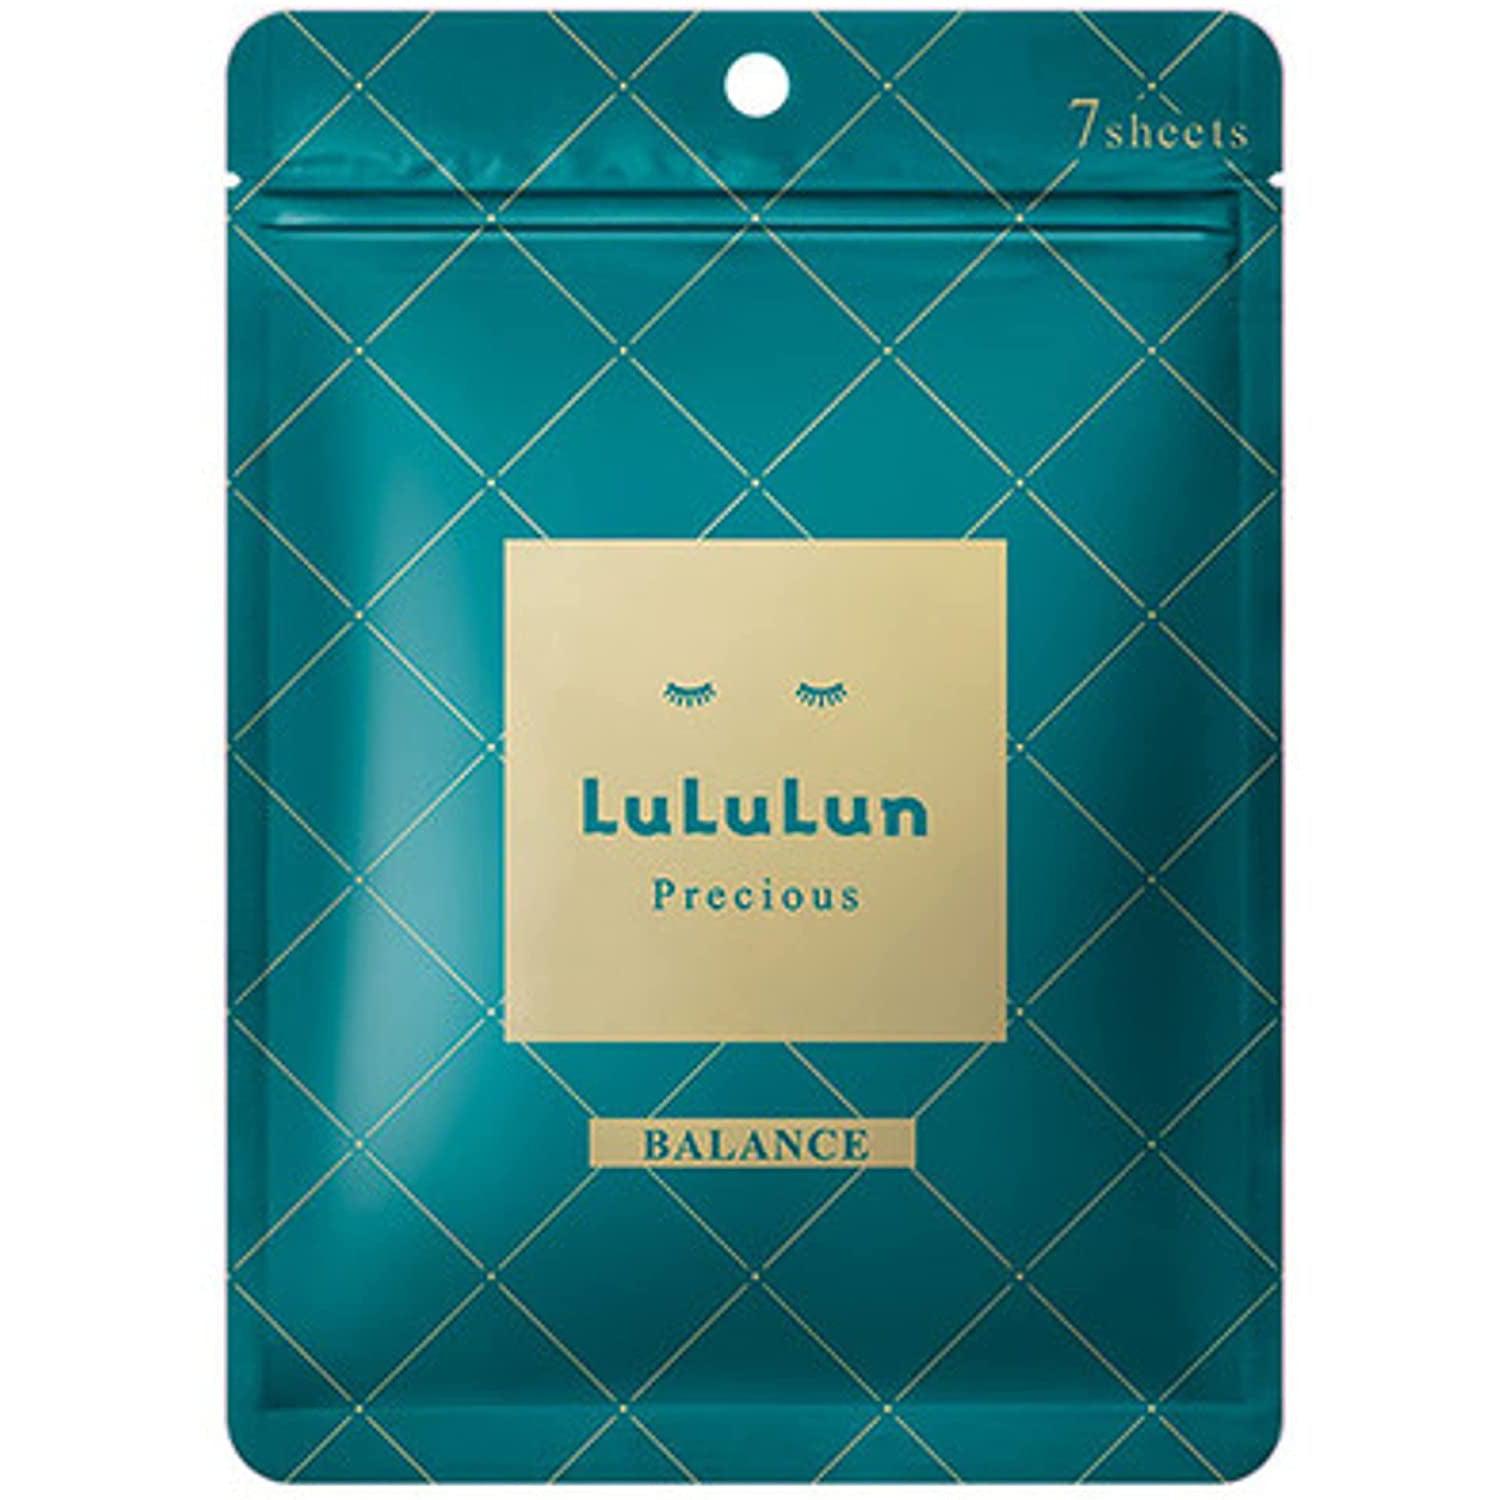 Lululun Precious Green Balance Anti Aging Face Mask 7 Sheets, Japanese Taste